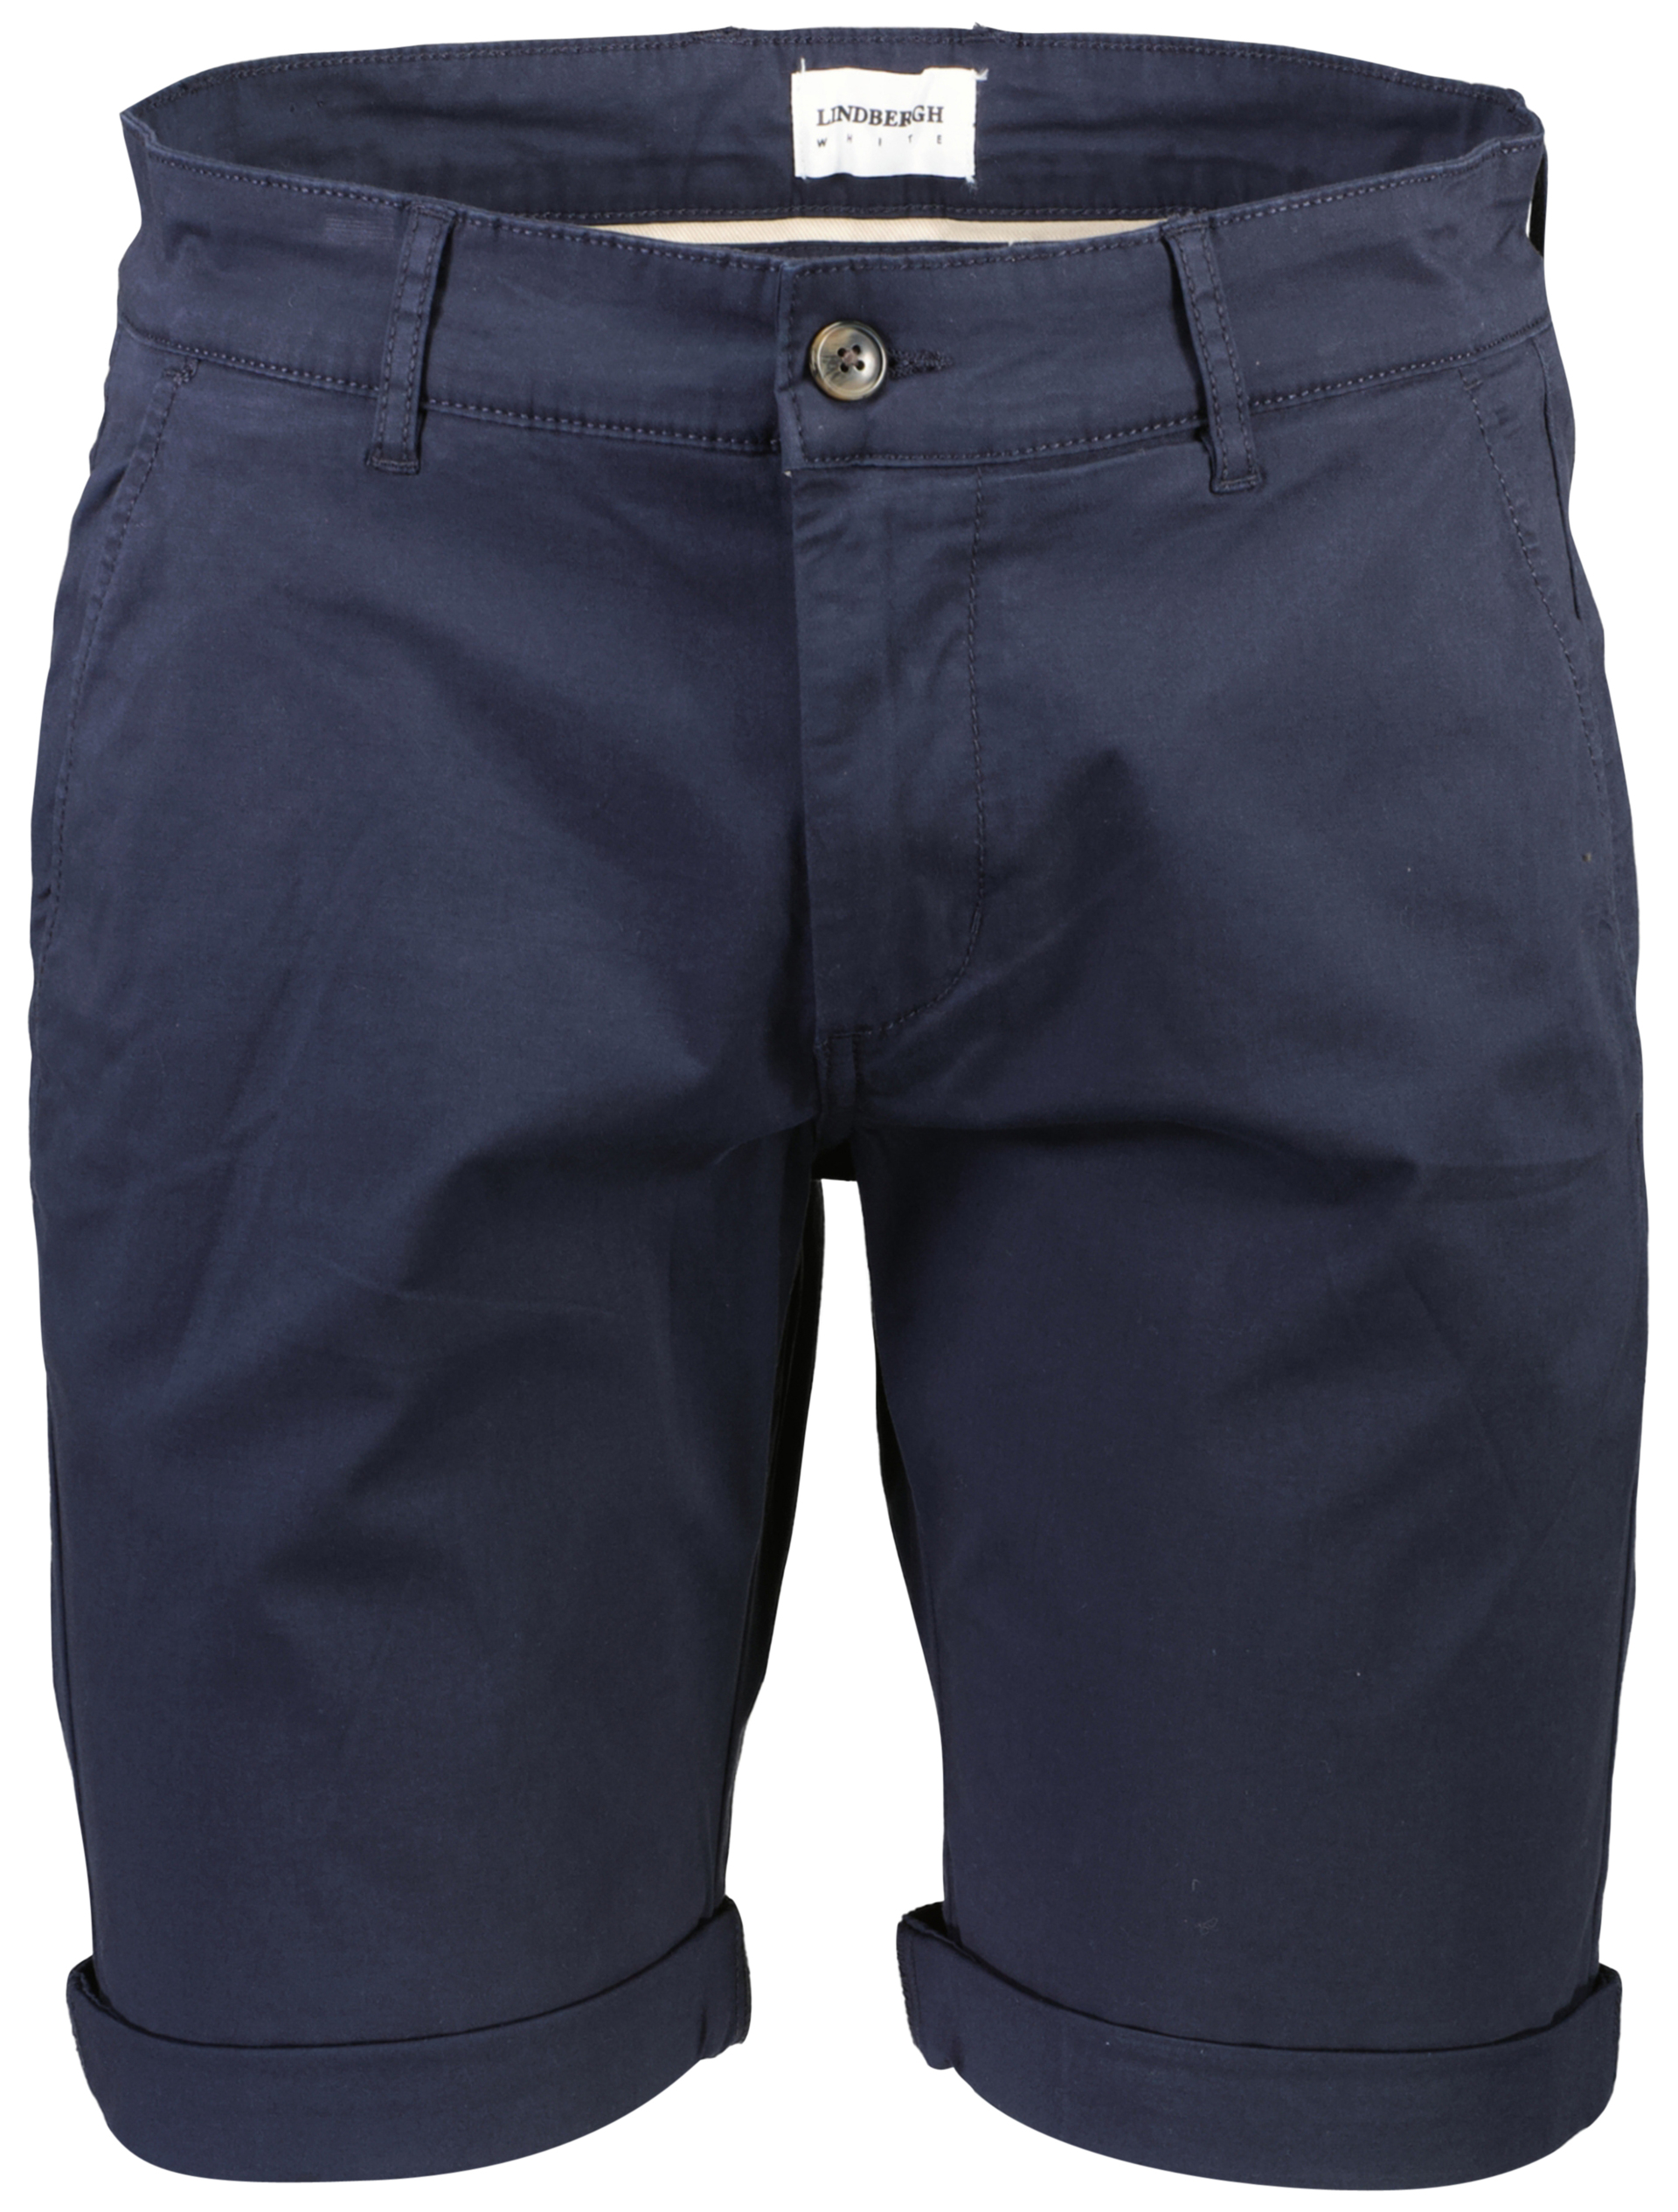 Lindbergh Chino shorts blue / dk navy